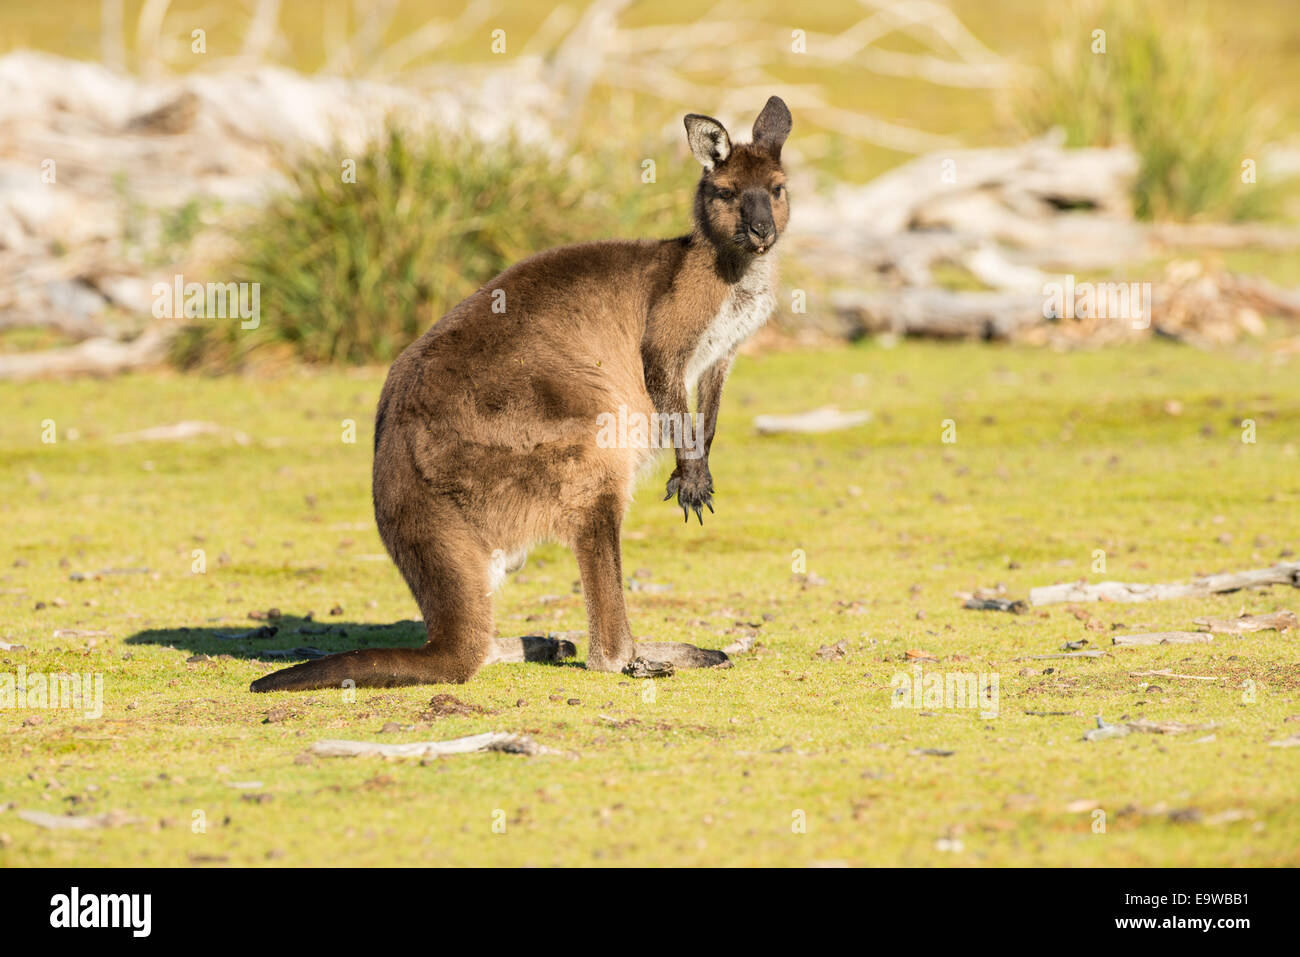 Kangaroo Island kangaroo standing upright. Stock Photo